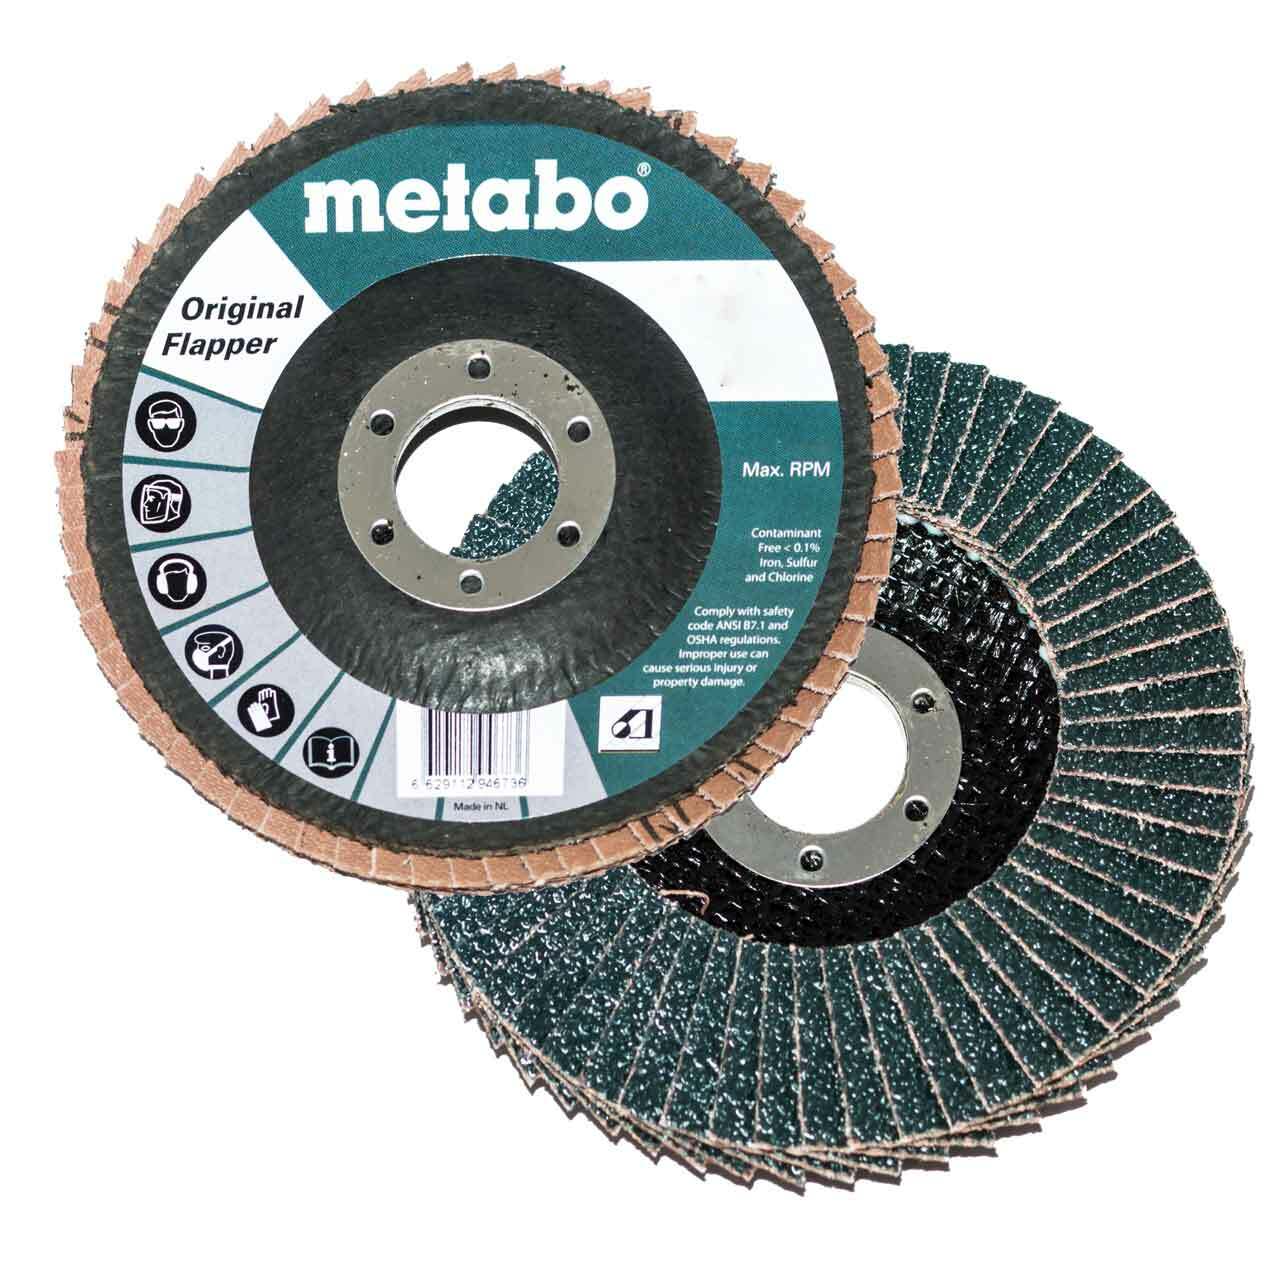 Metabo Original Flapper 4-1/2' Flap Disc 40 grit